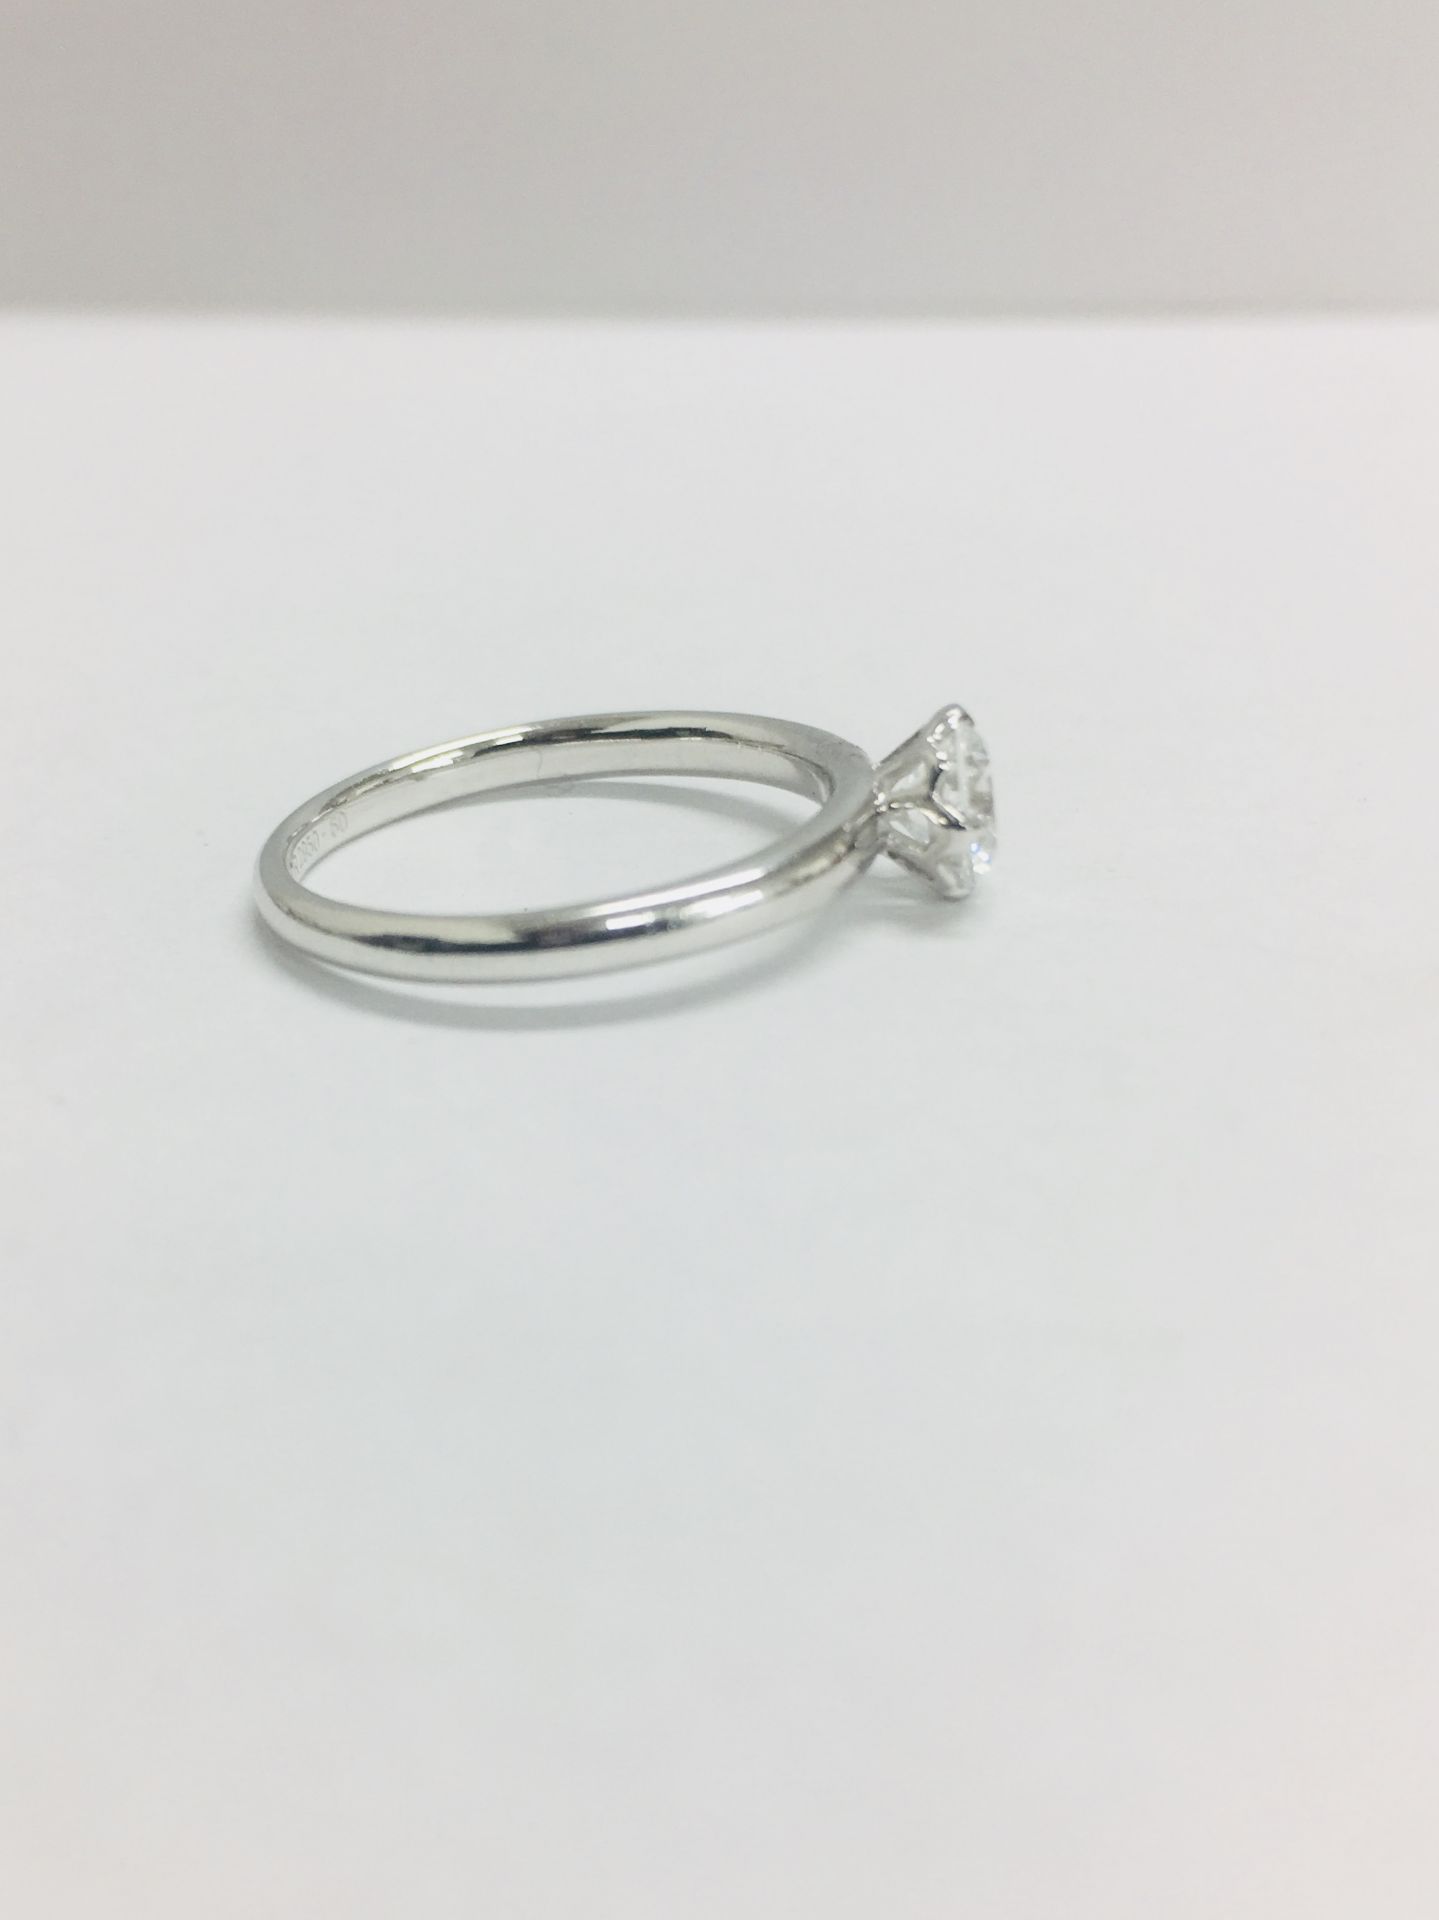 Platinum diamond solitaire ring,050ct h colour vs clarity natural diamond - Image 5 of 6